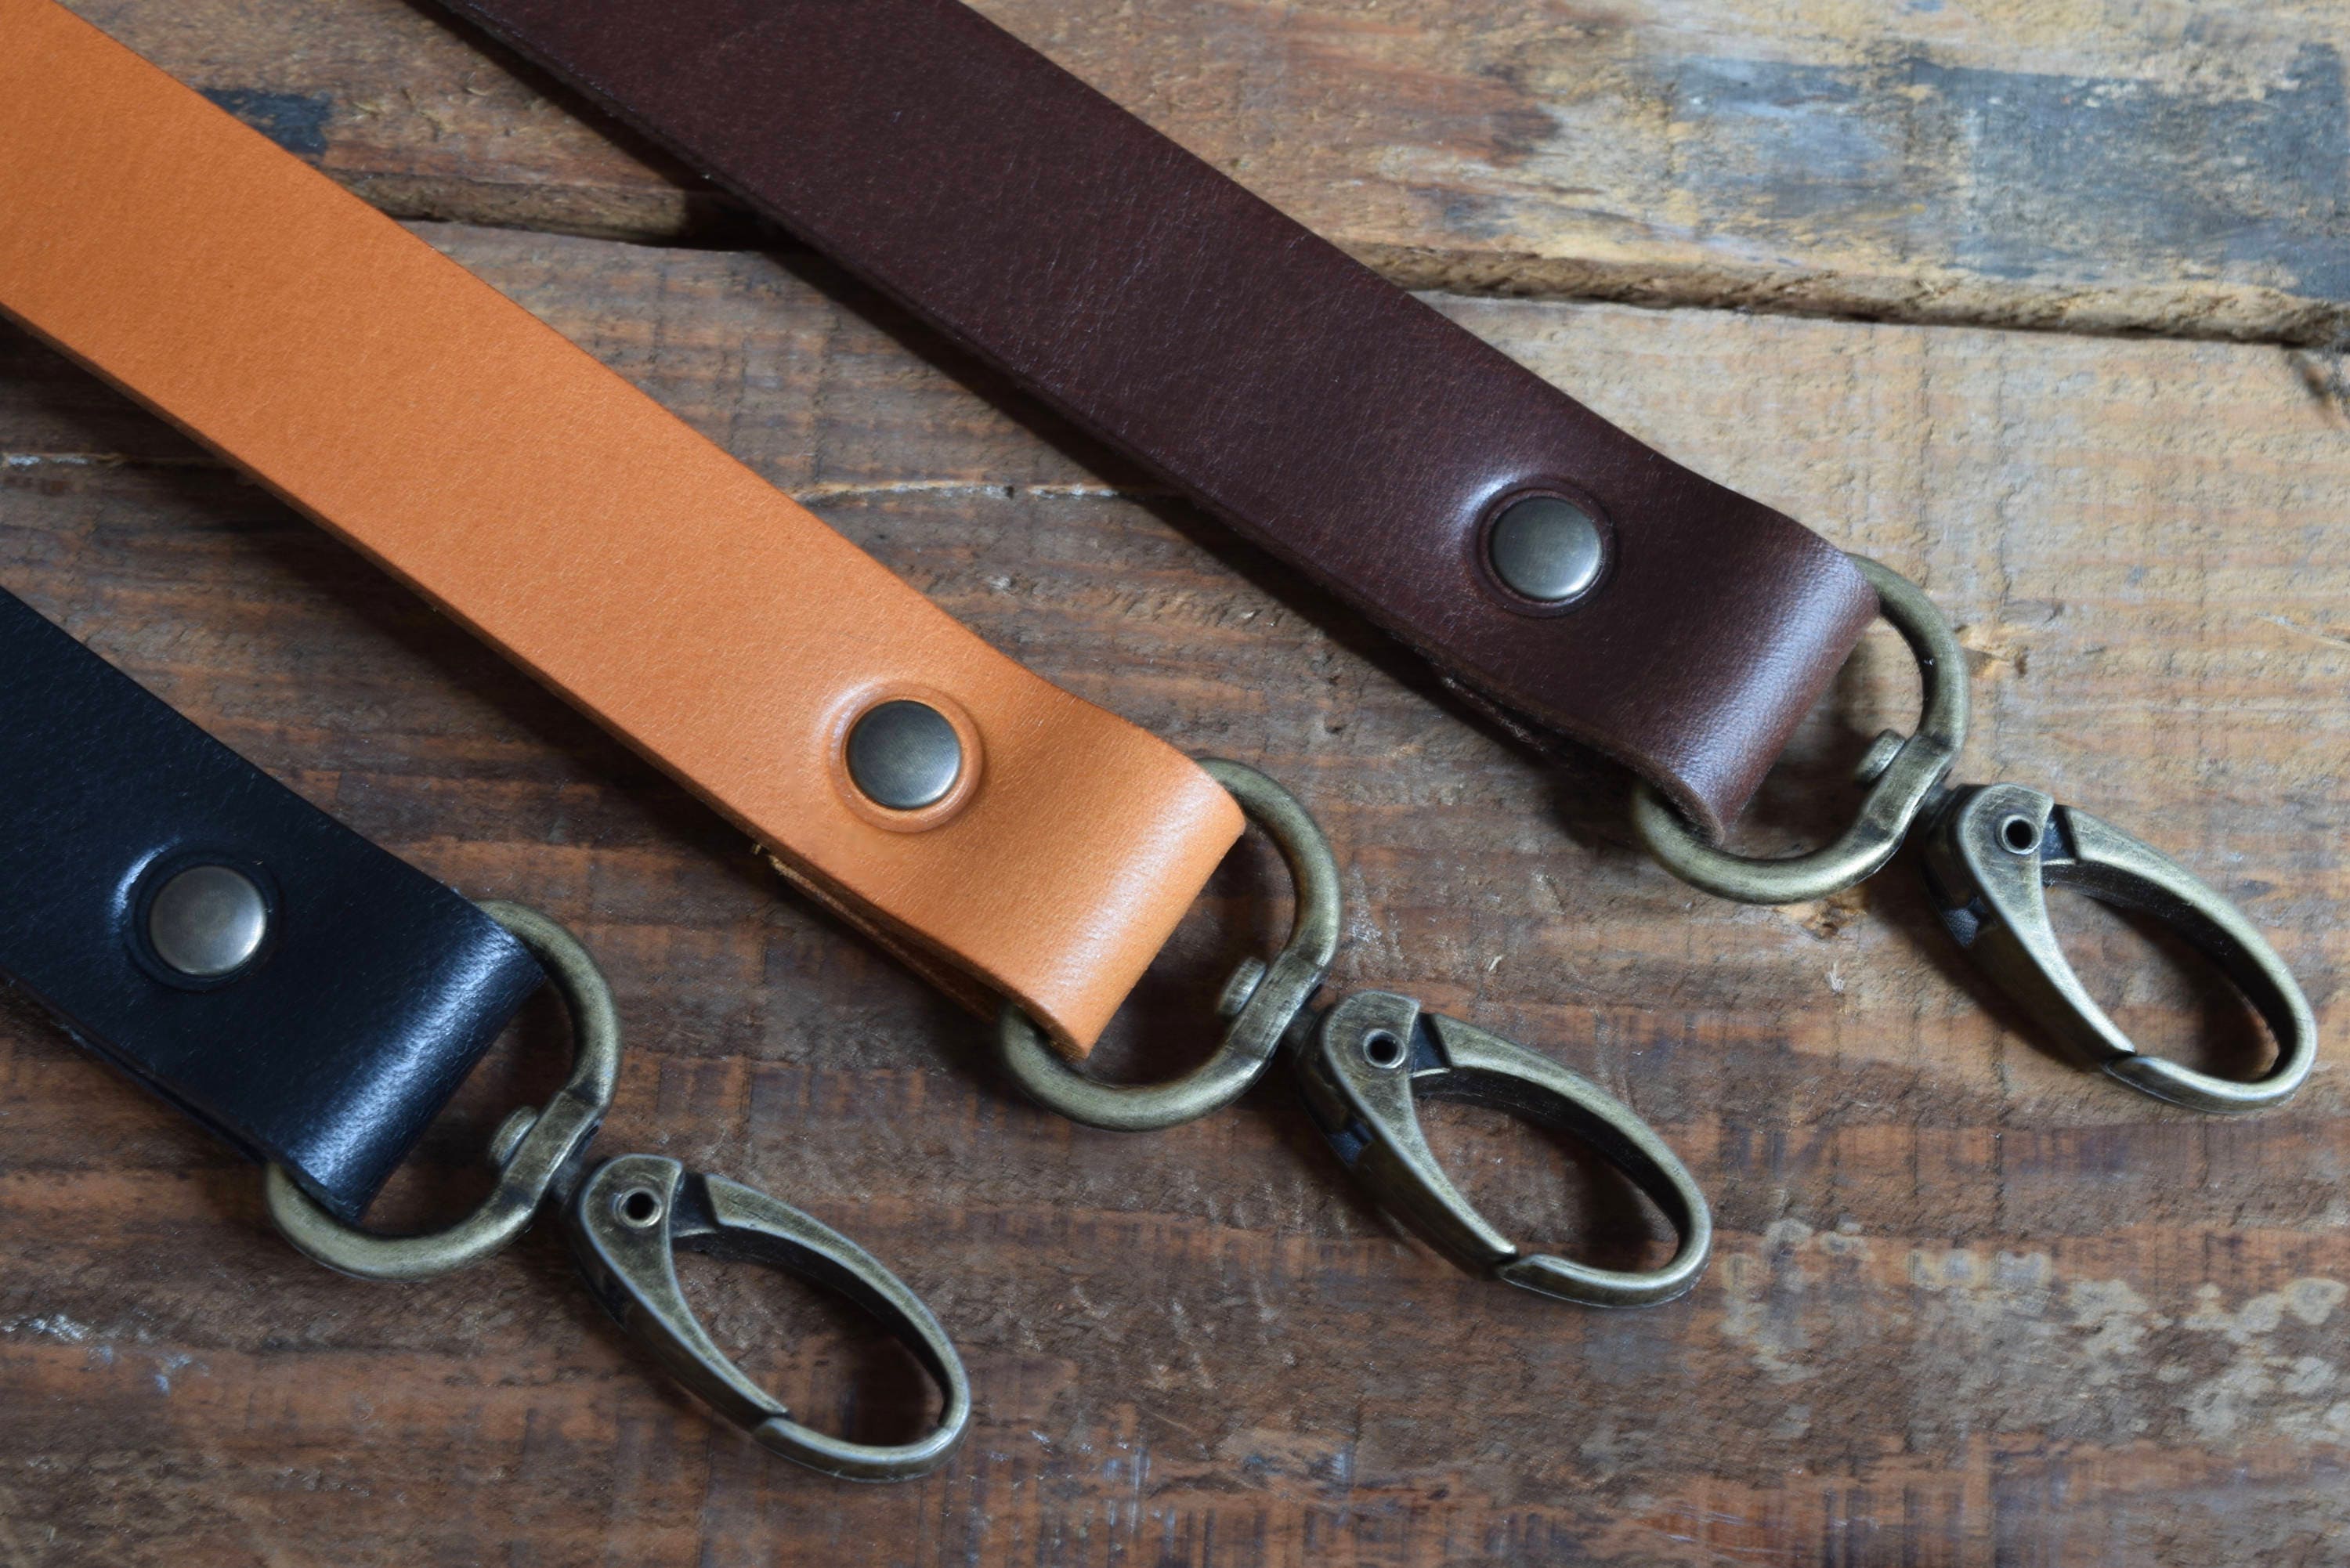 Vachetta Leather Strap - Adjustable (25mm)